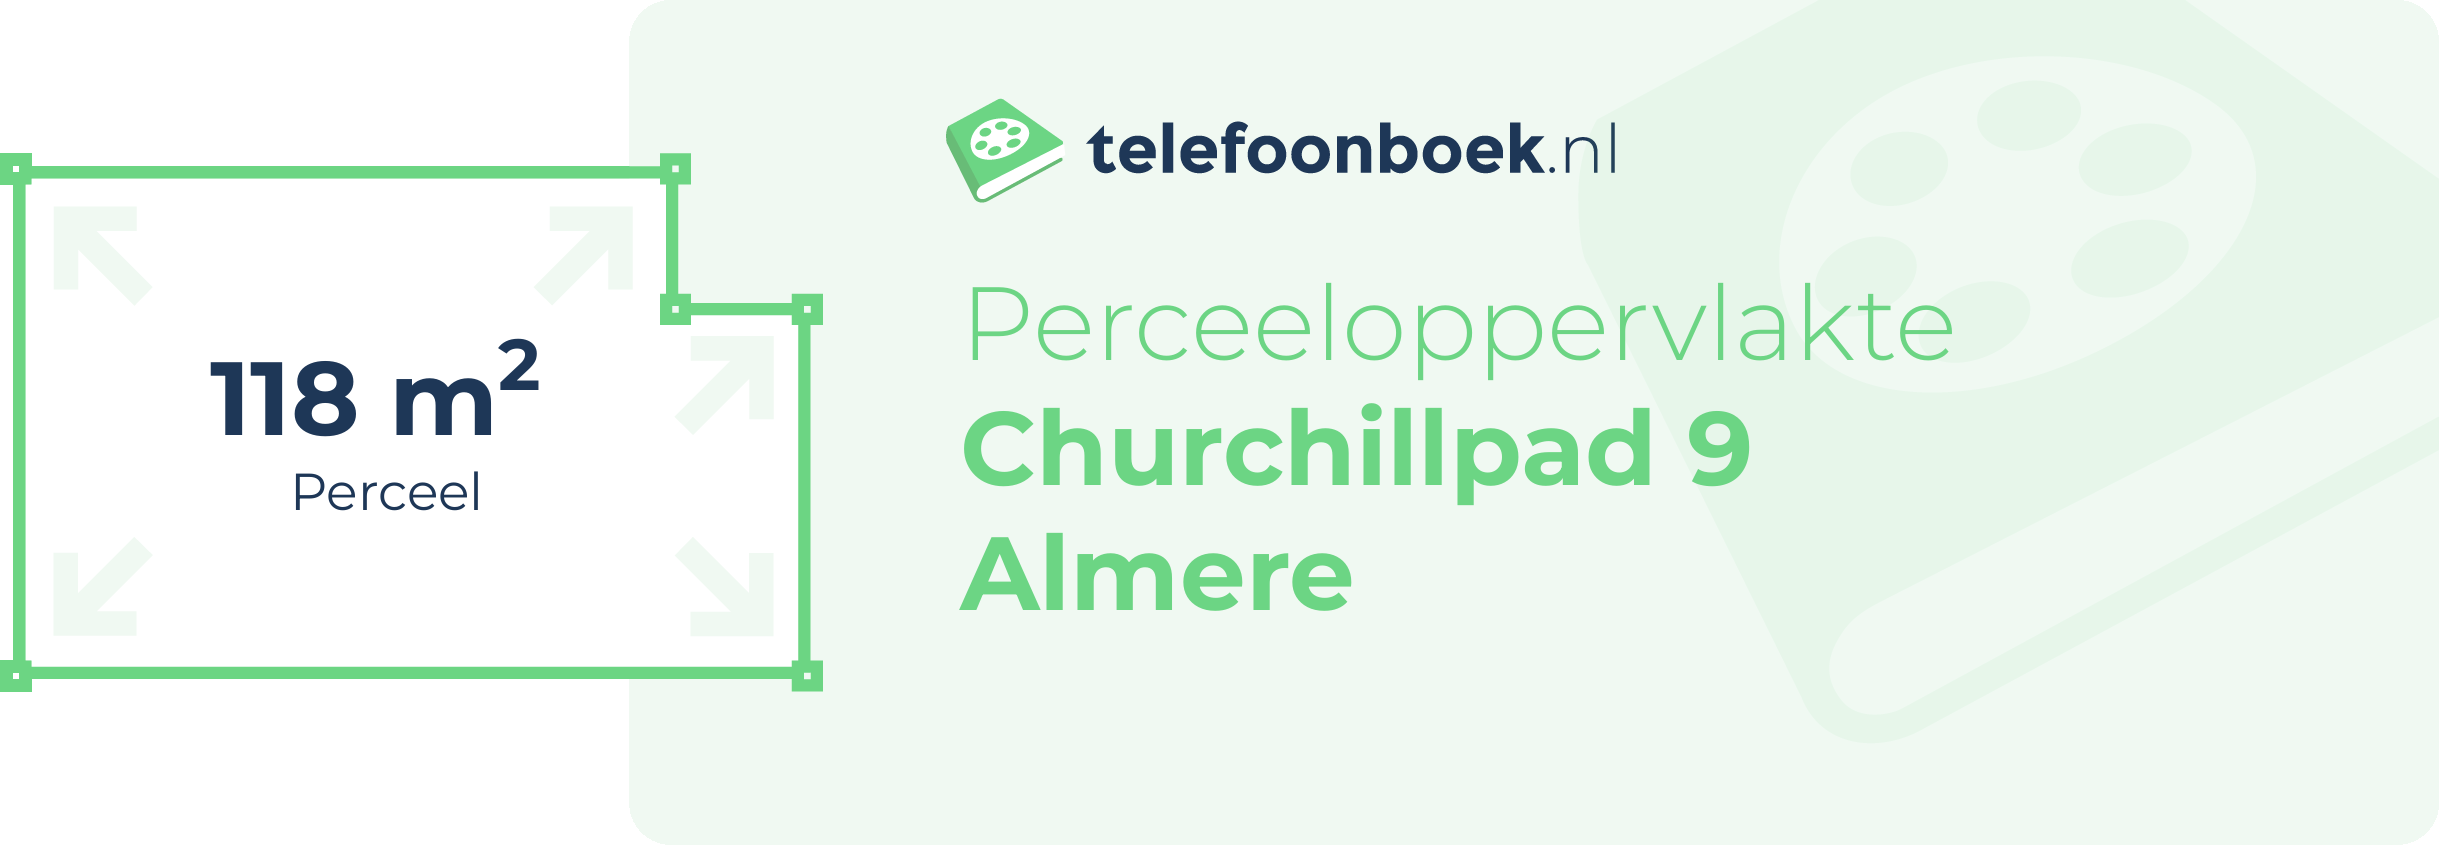 Perceeloppervlakte Churchillpad 9 Almere